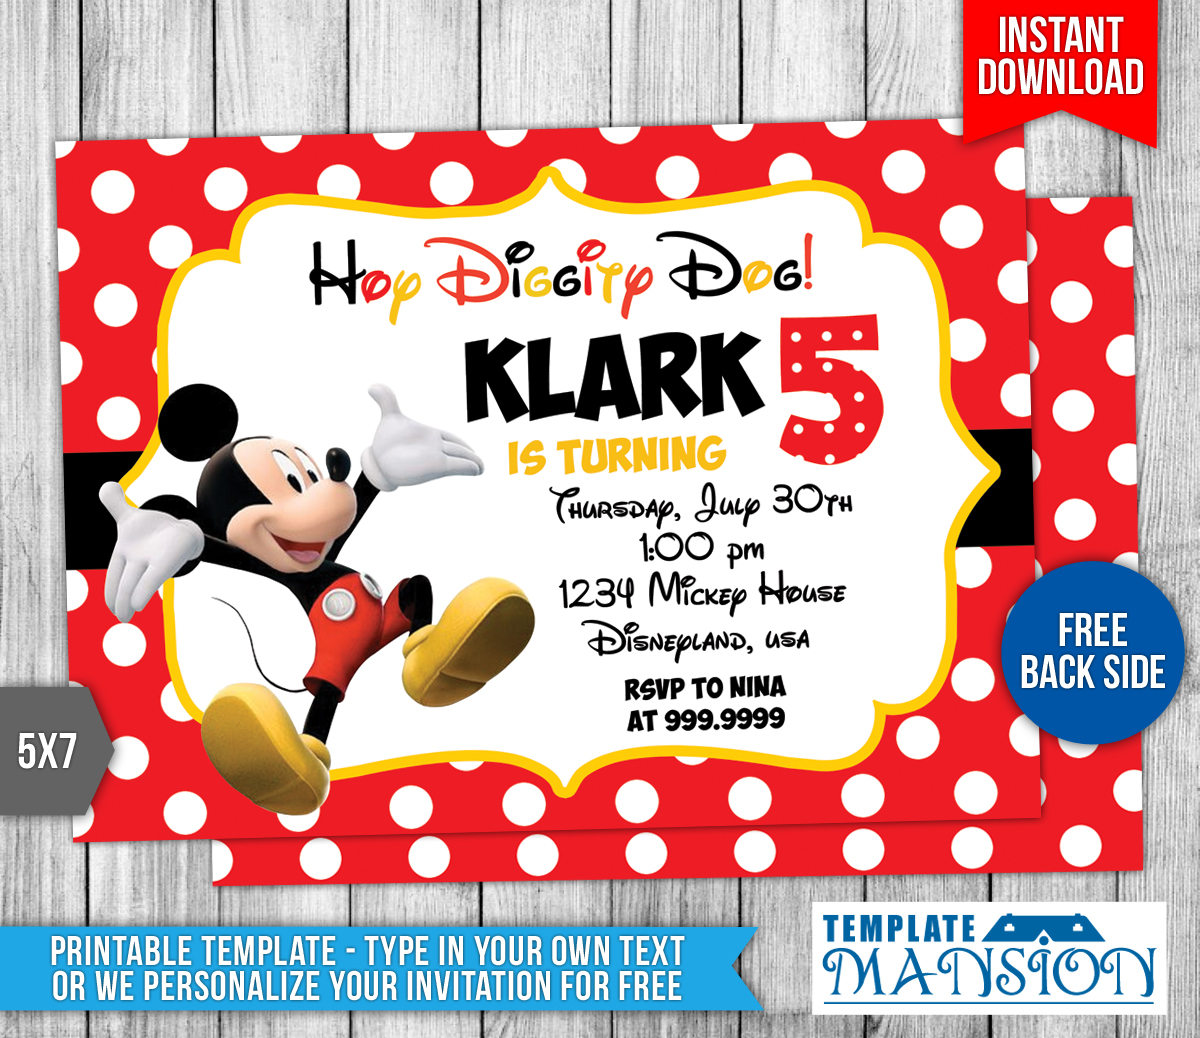 Disney Mickey Mouse Birthday Invitation by templatemansion on DeviantArt